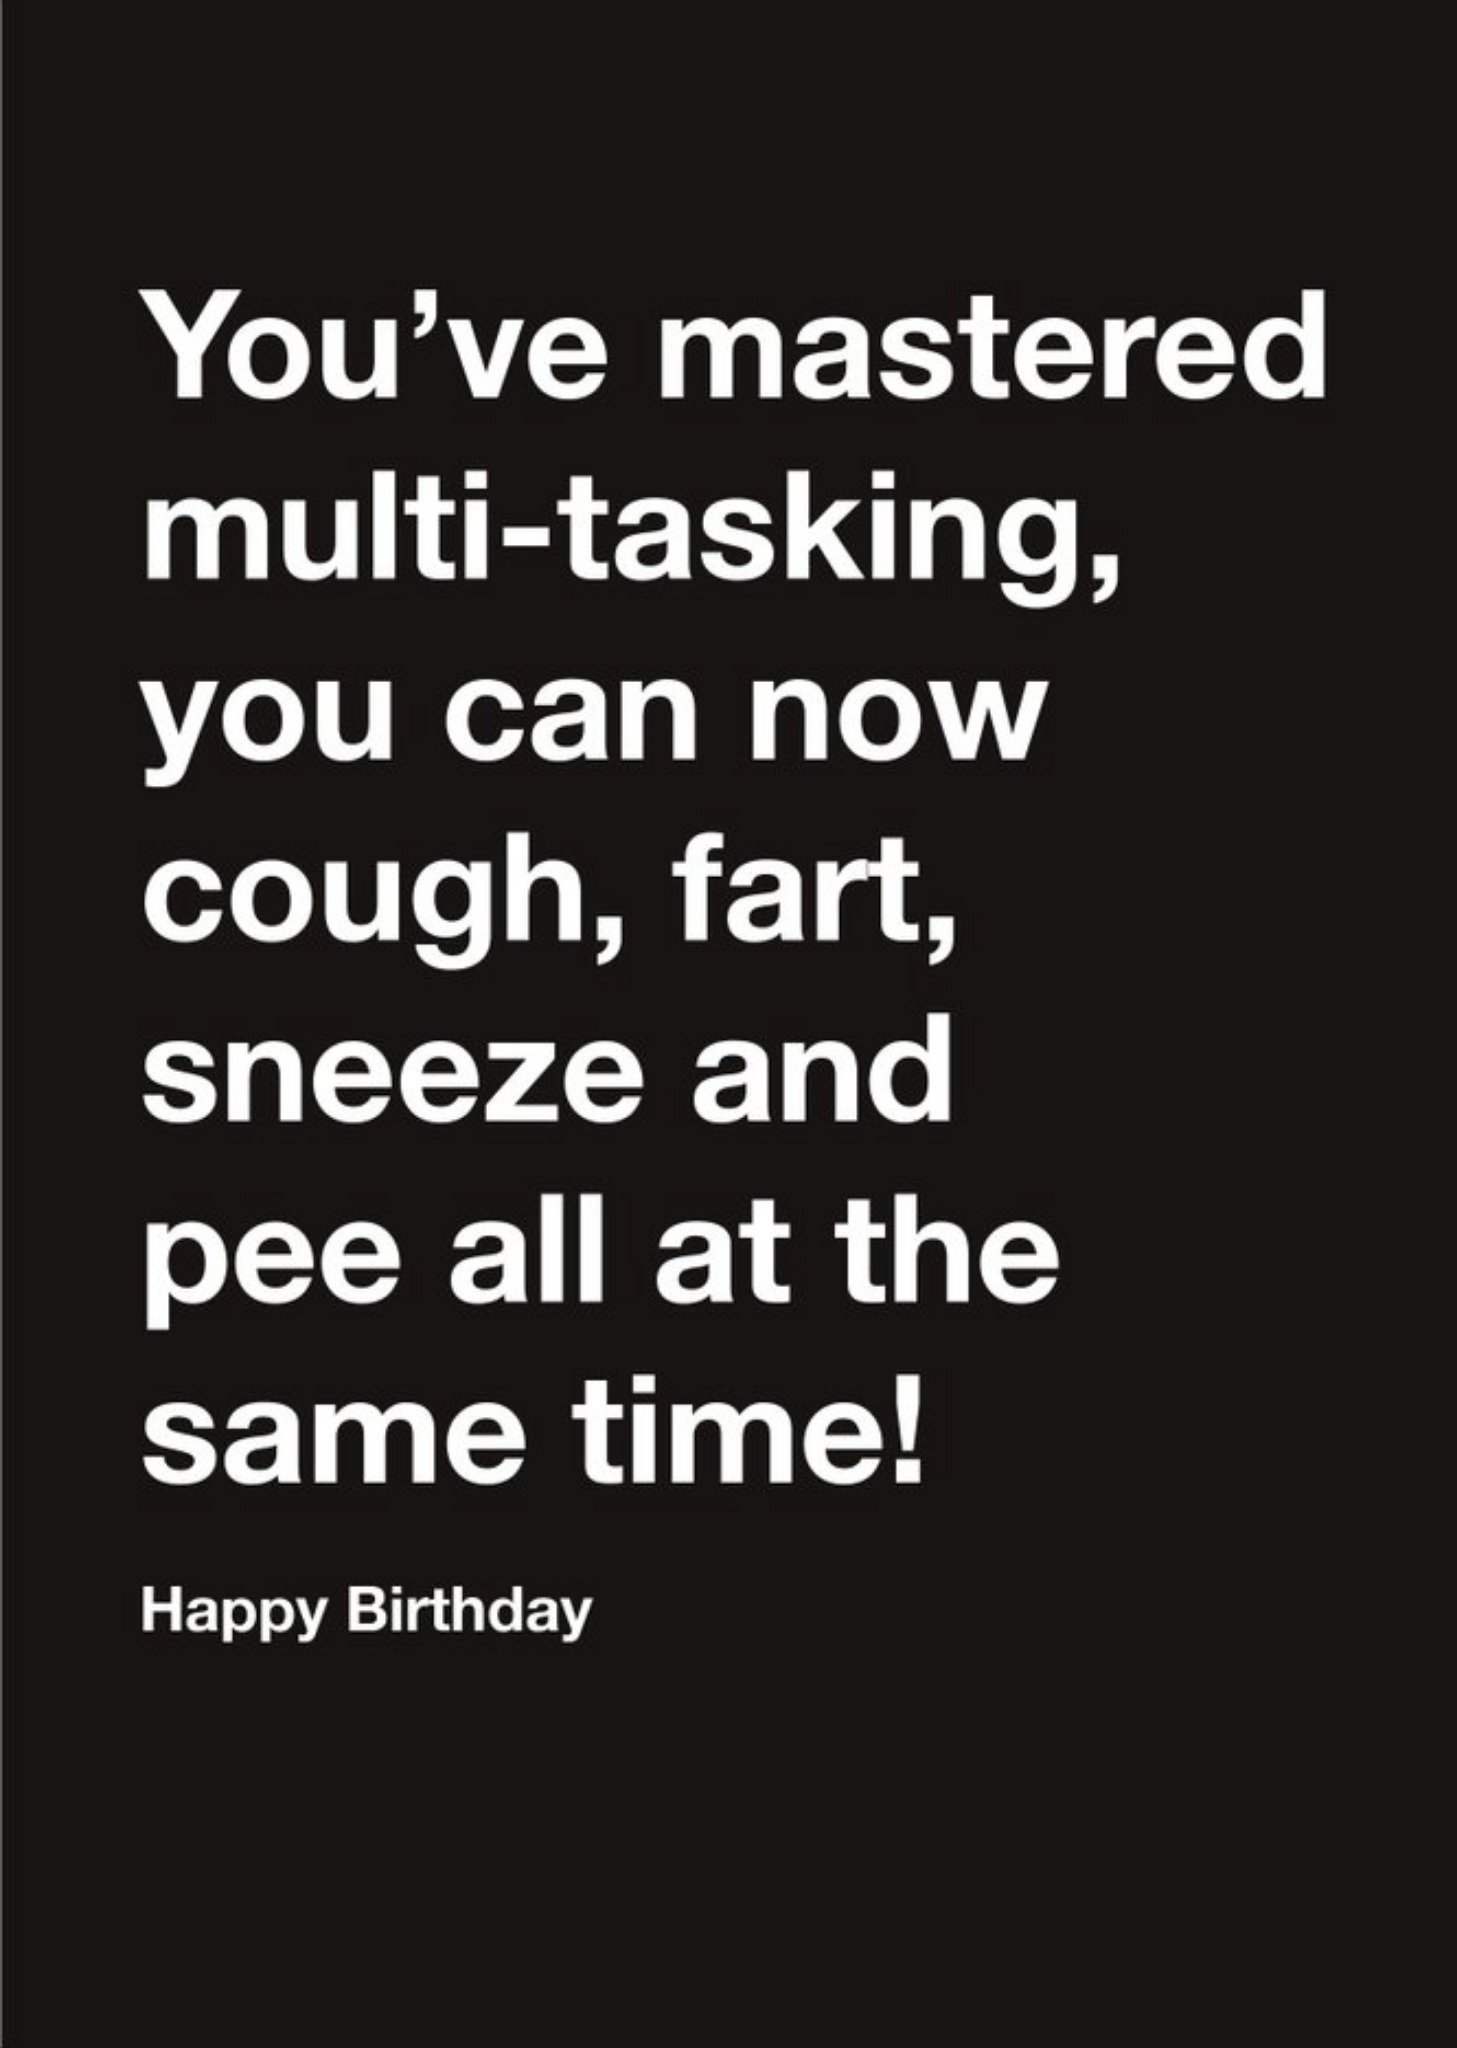 Moonpig Carte Blanche Mastered Multi-Tasking Happy Birthday Card, Large